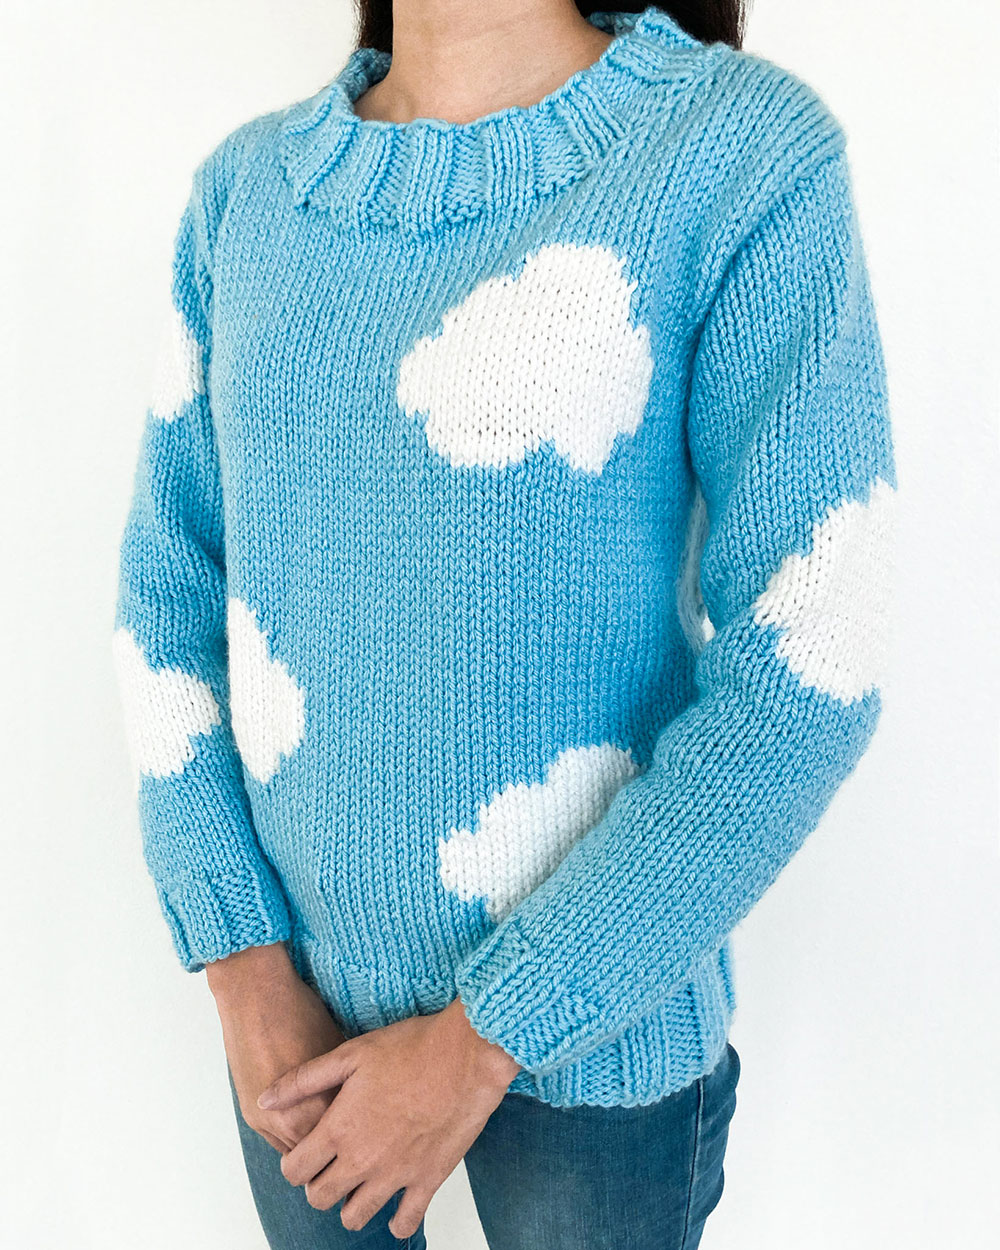 Cloud sweater - Couple of Needles